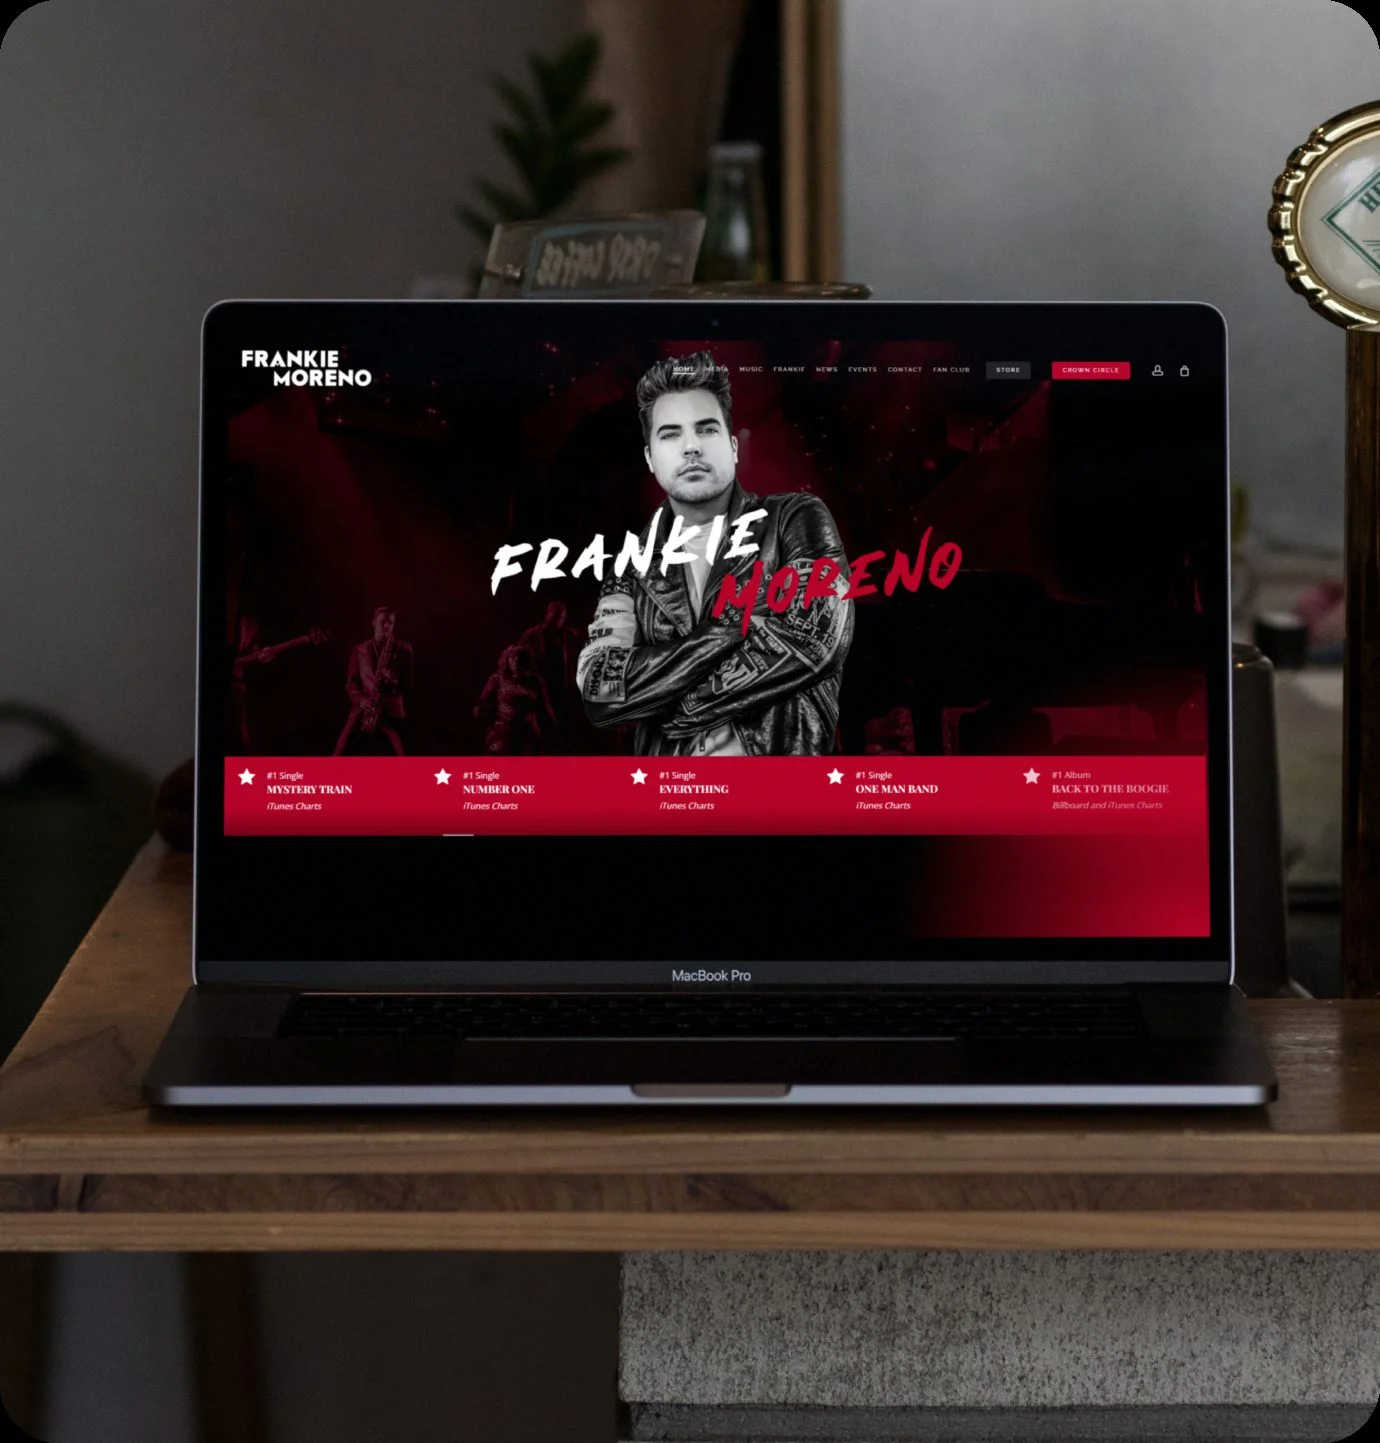 Frankie moreno web design portfolio mockup on a laptop